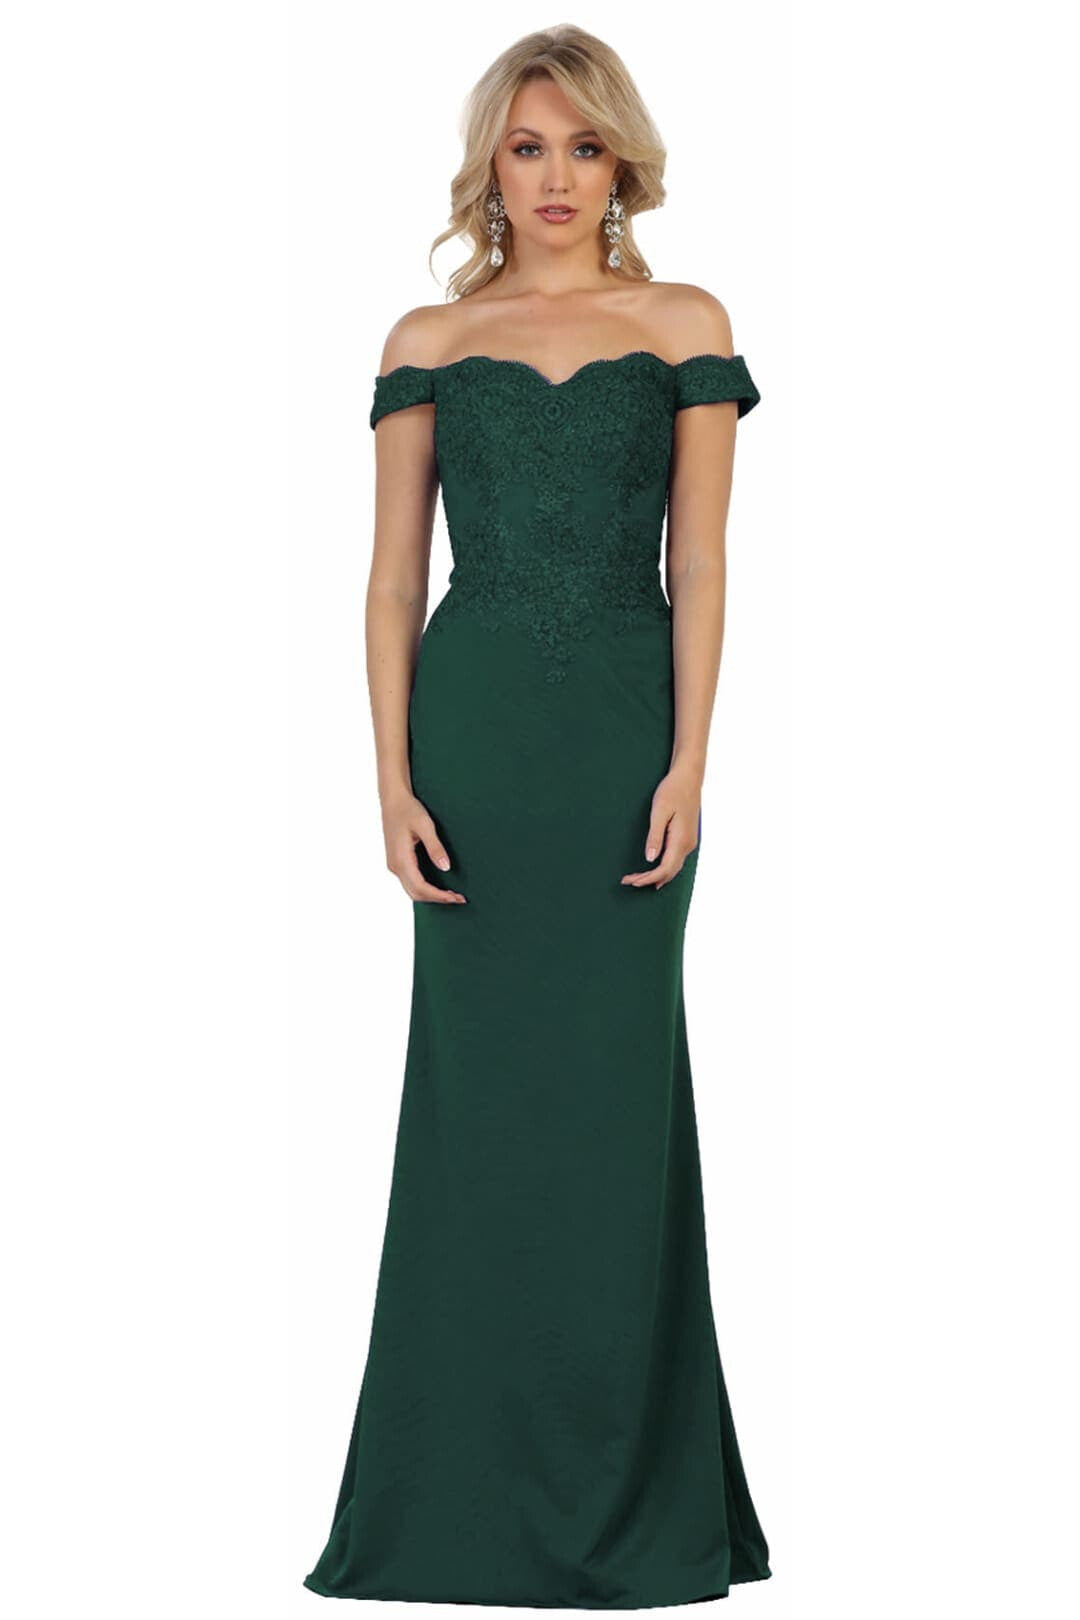 May Queen MQ1529 Elegant Form Fitting Evening Dress - Hunter Green / 6